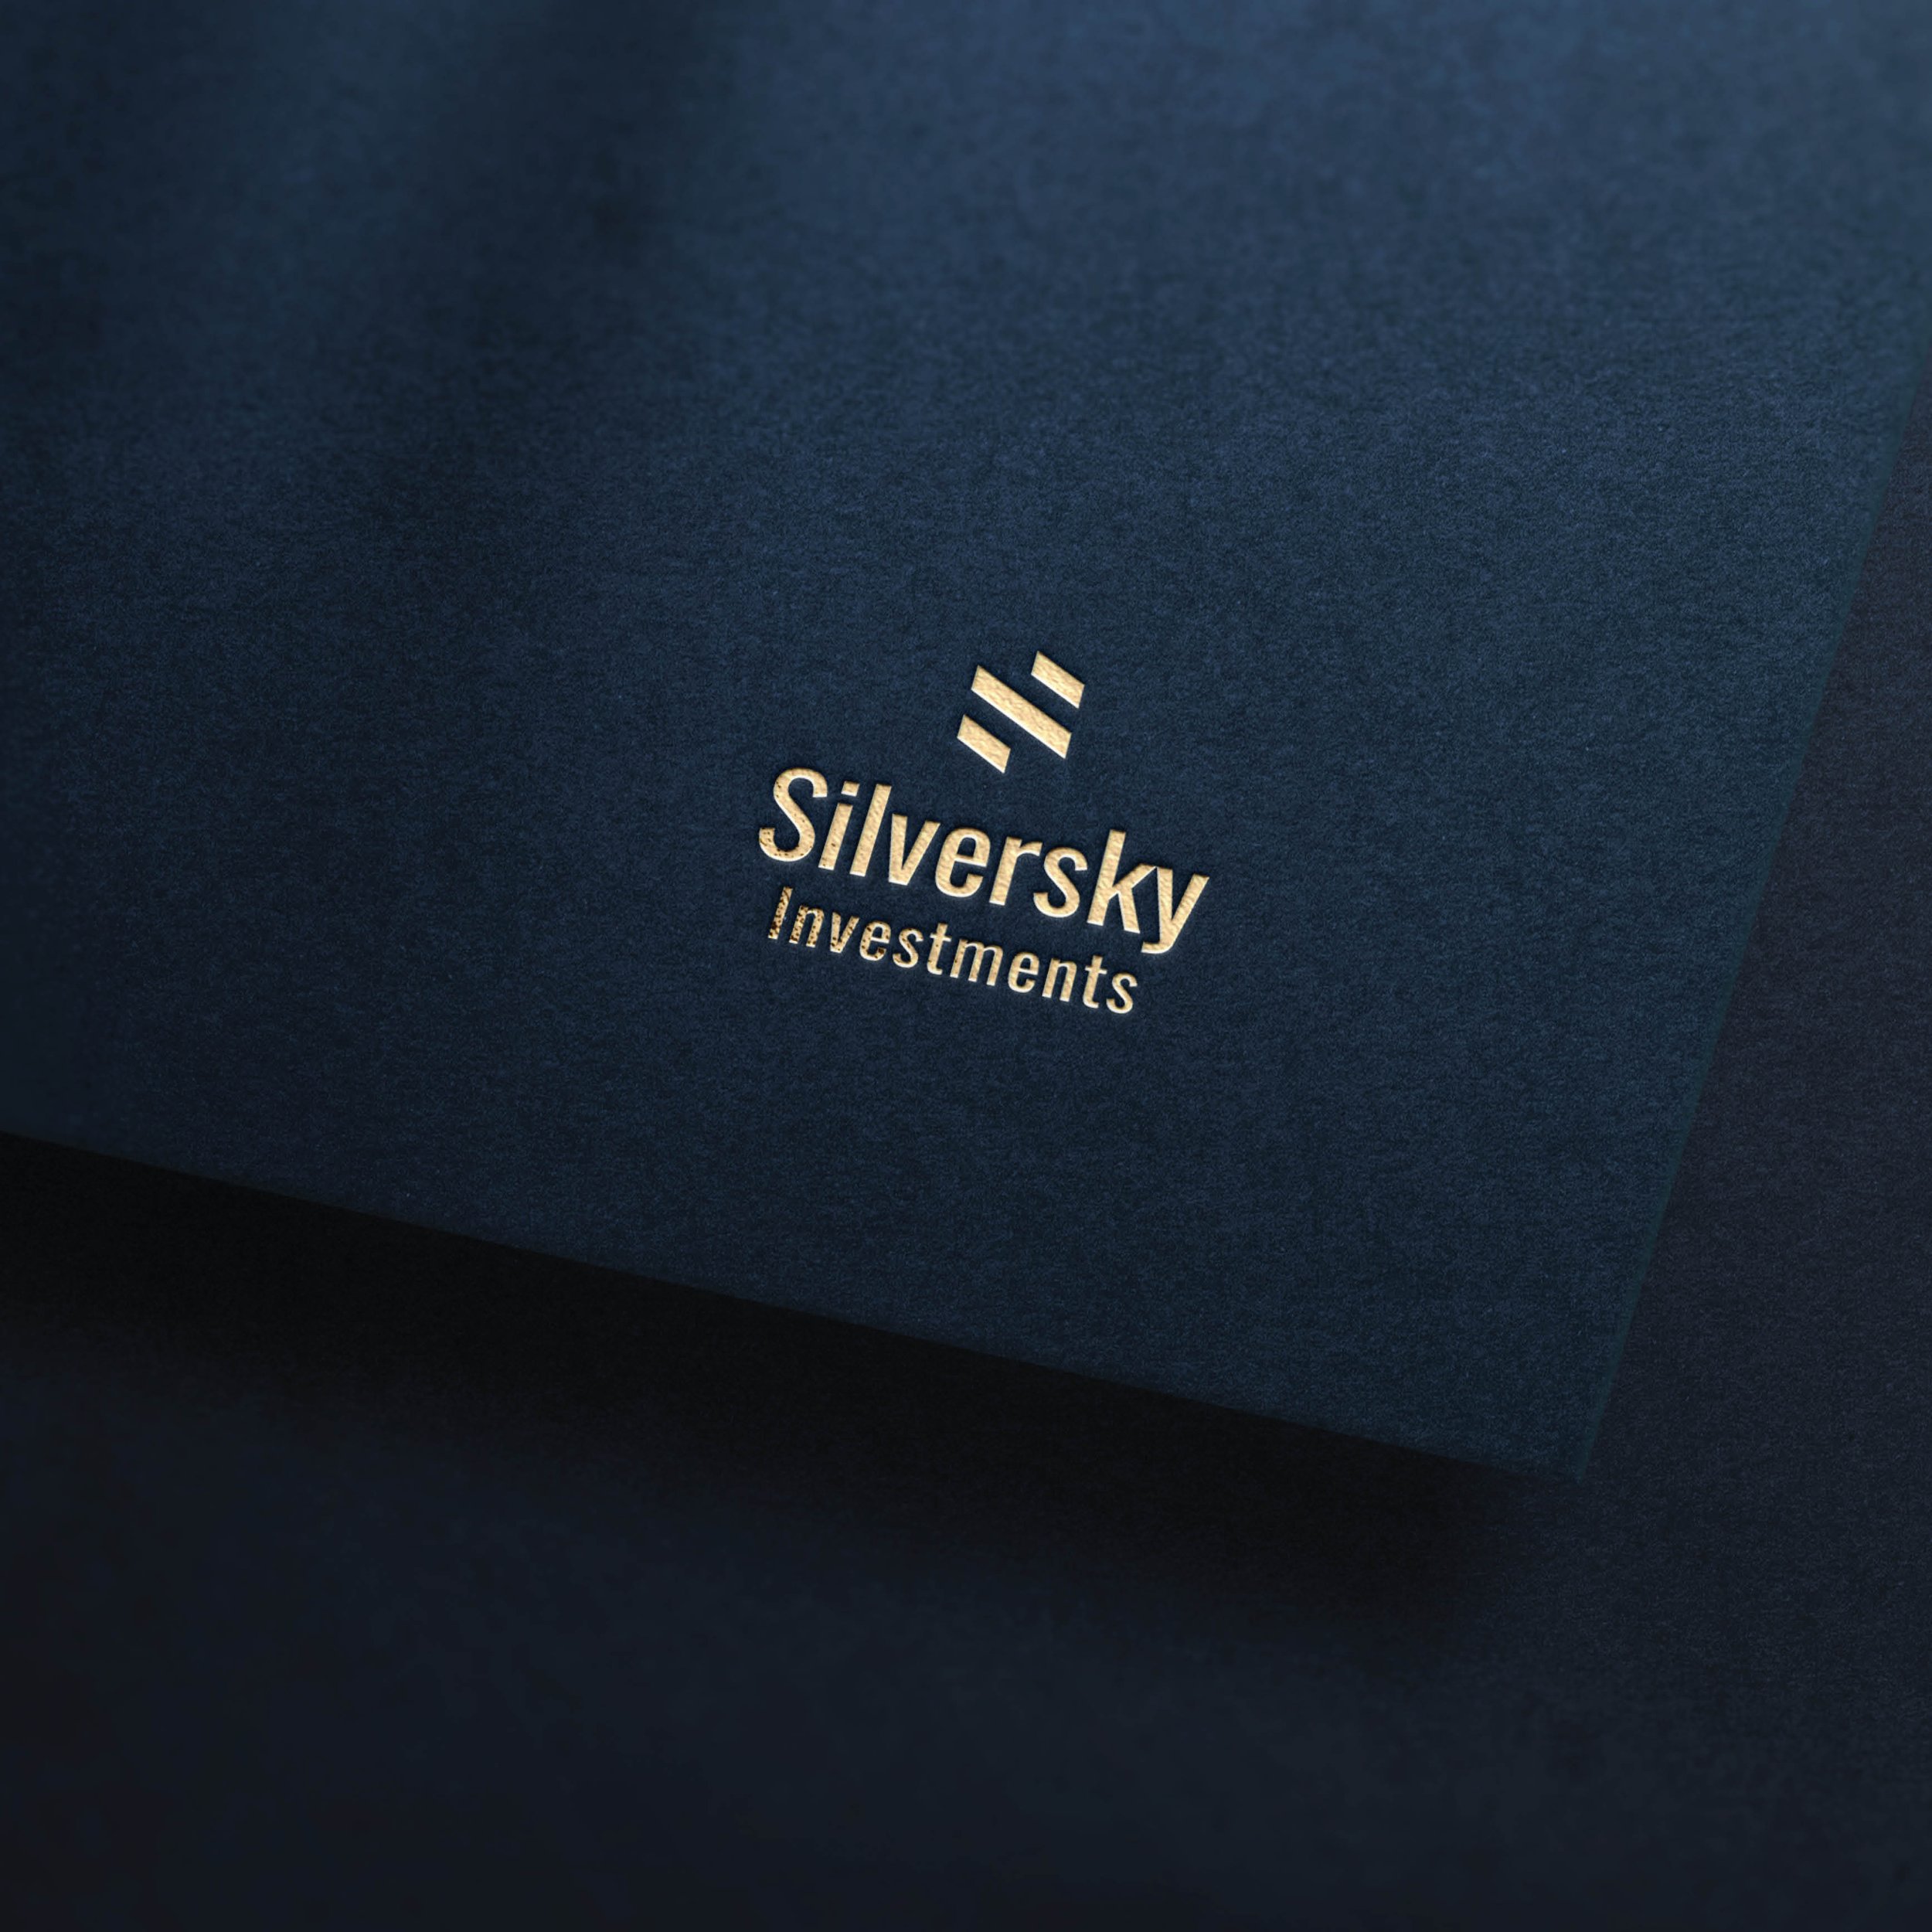 Logo and brand identity SilverSky Investment by Holum Studio23.jpg